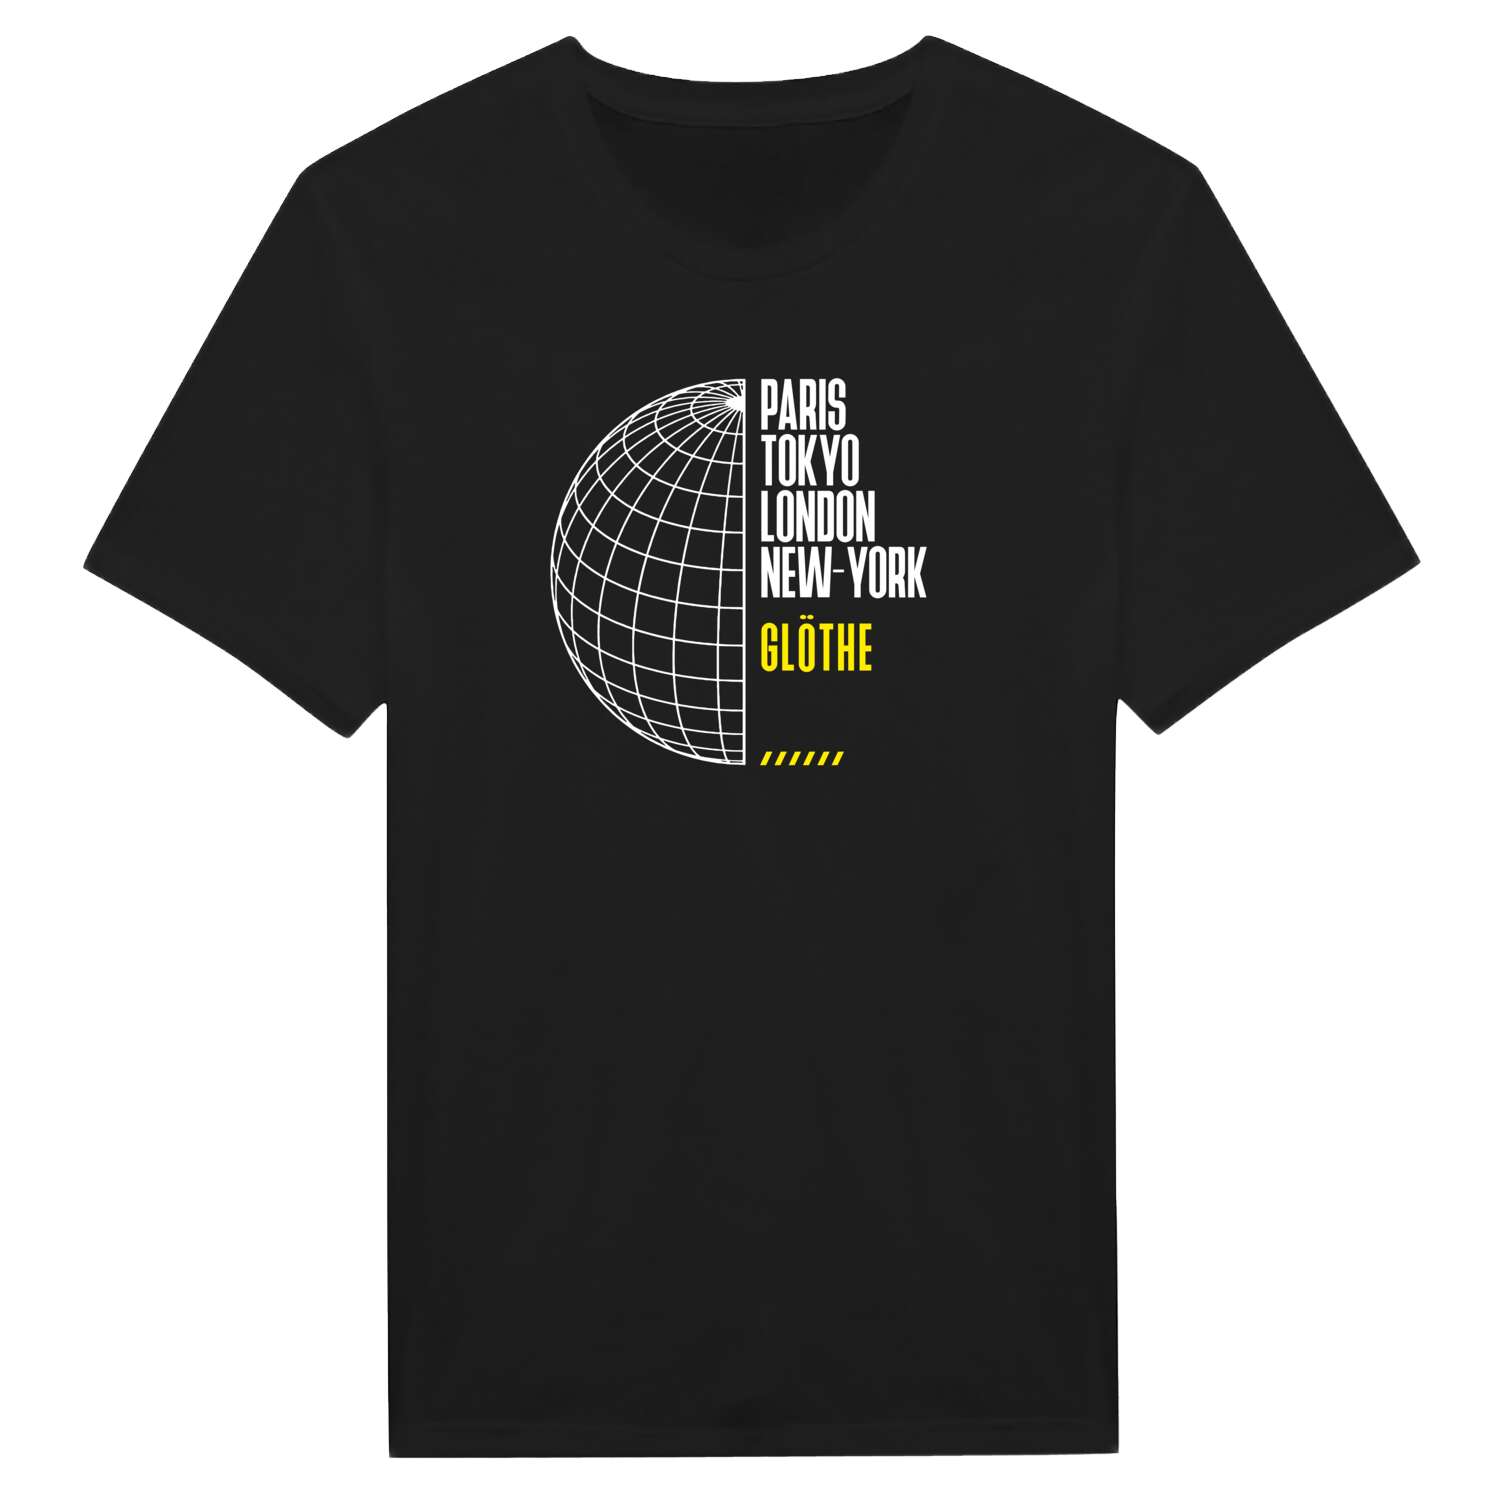 Glöthe T-Shirt »Paris Tokyo London«